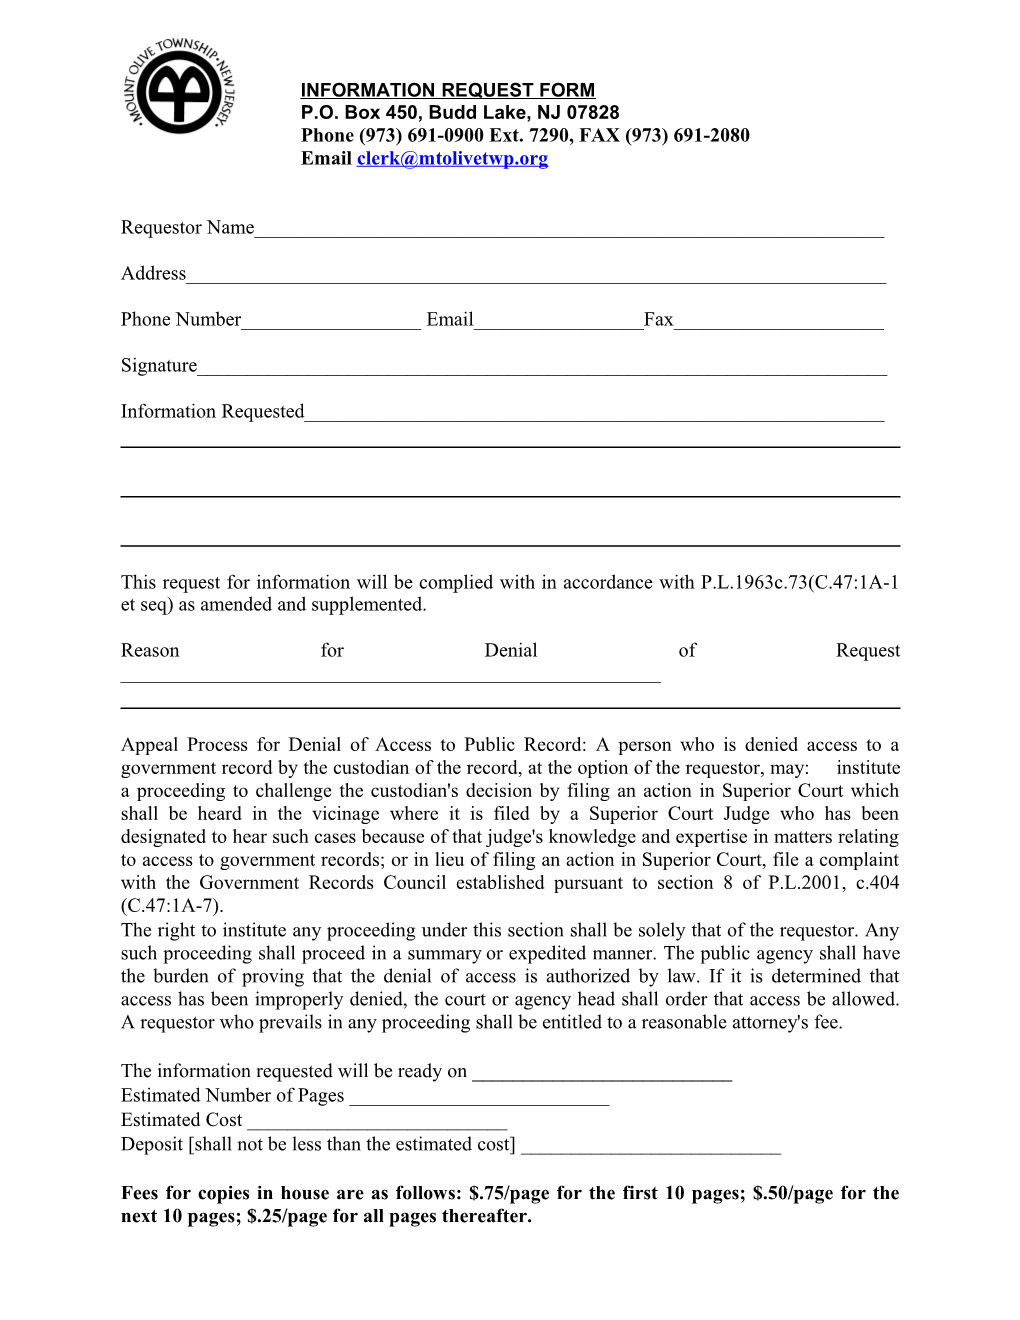 Information Request Form